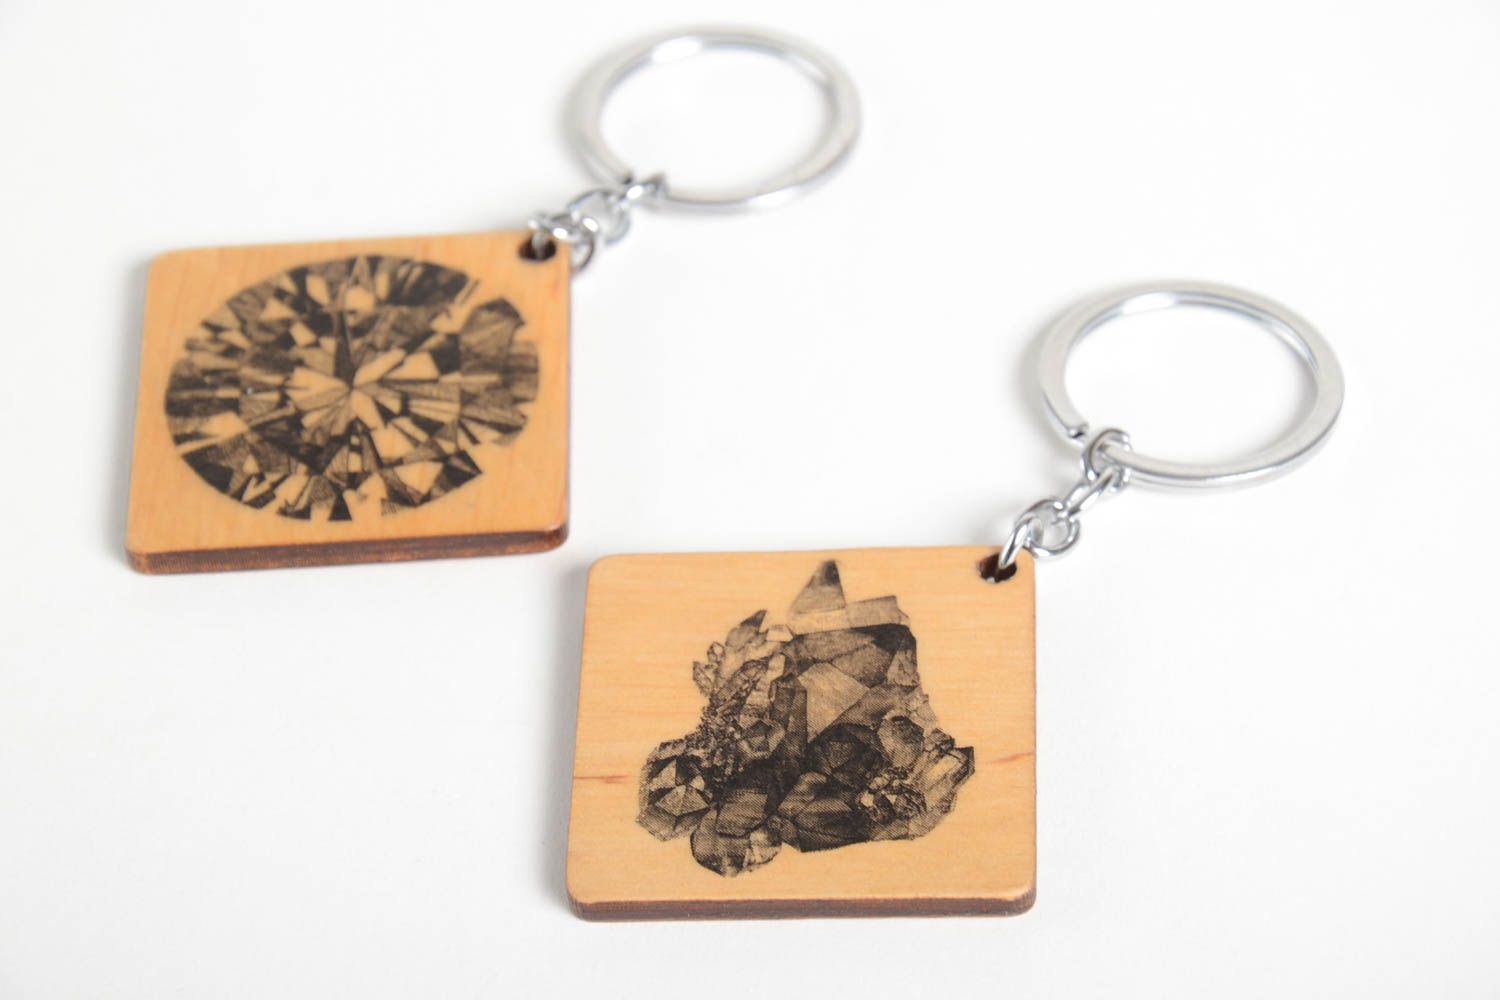 Handmade keychain designer keychains wooden souvenirs gift for him 2 items photo 2